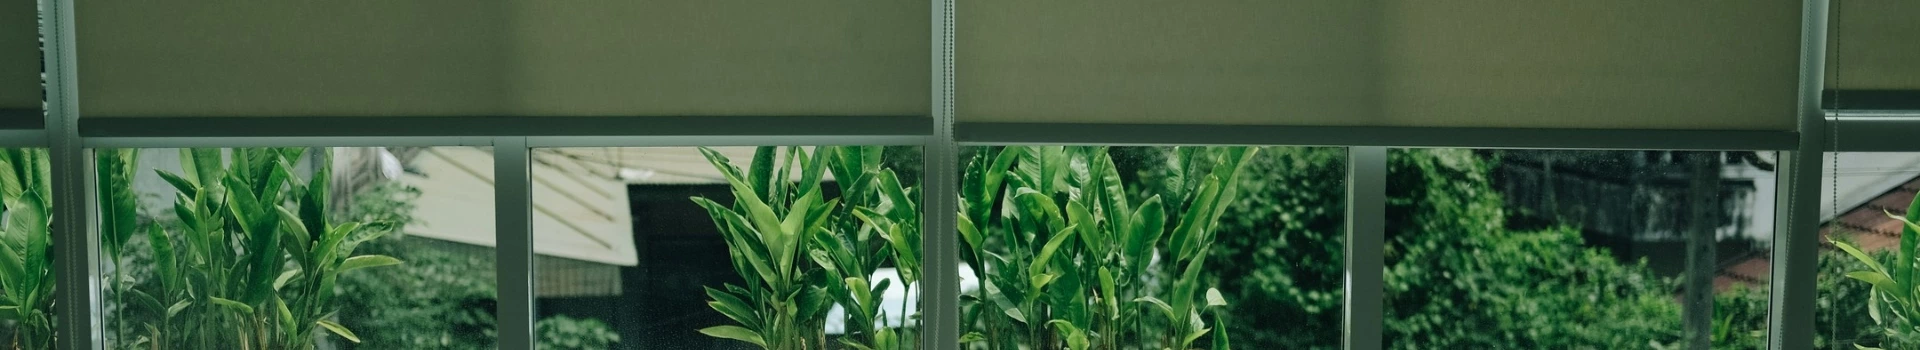 rośliny za oknem